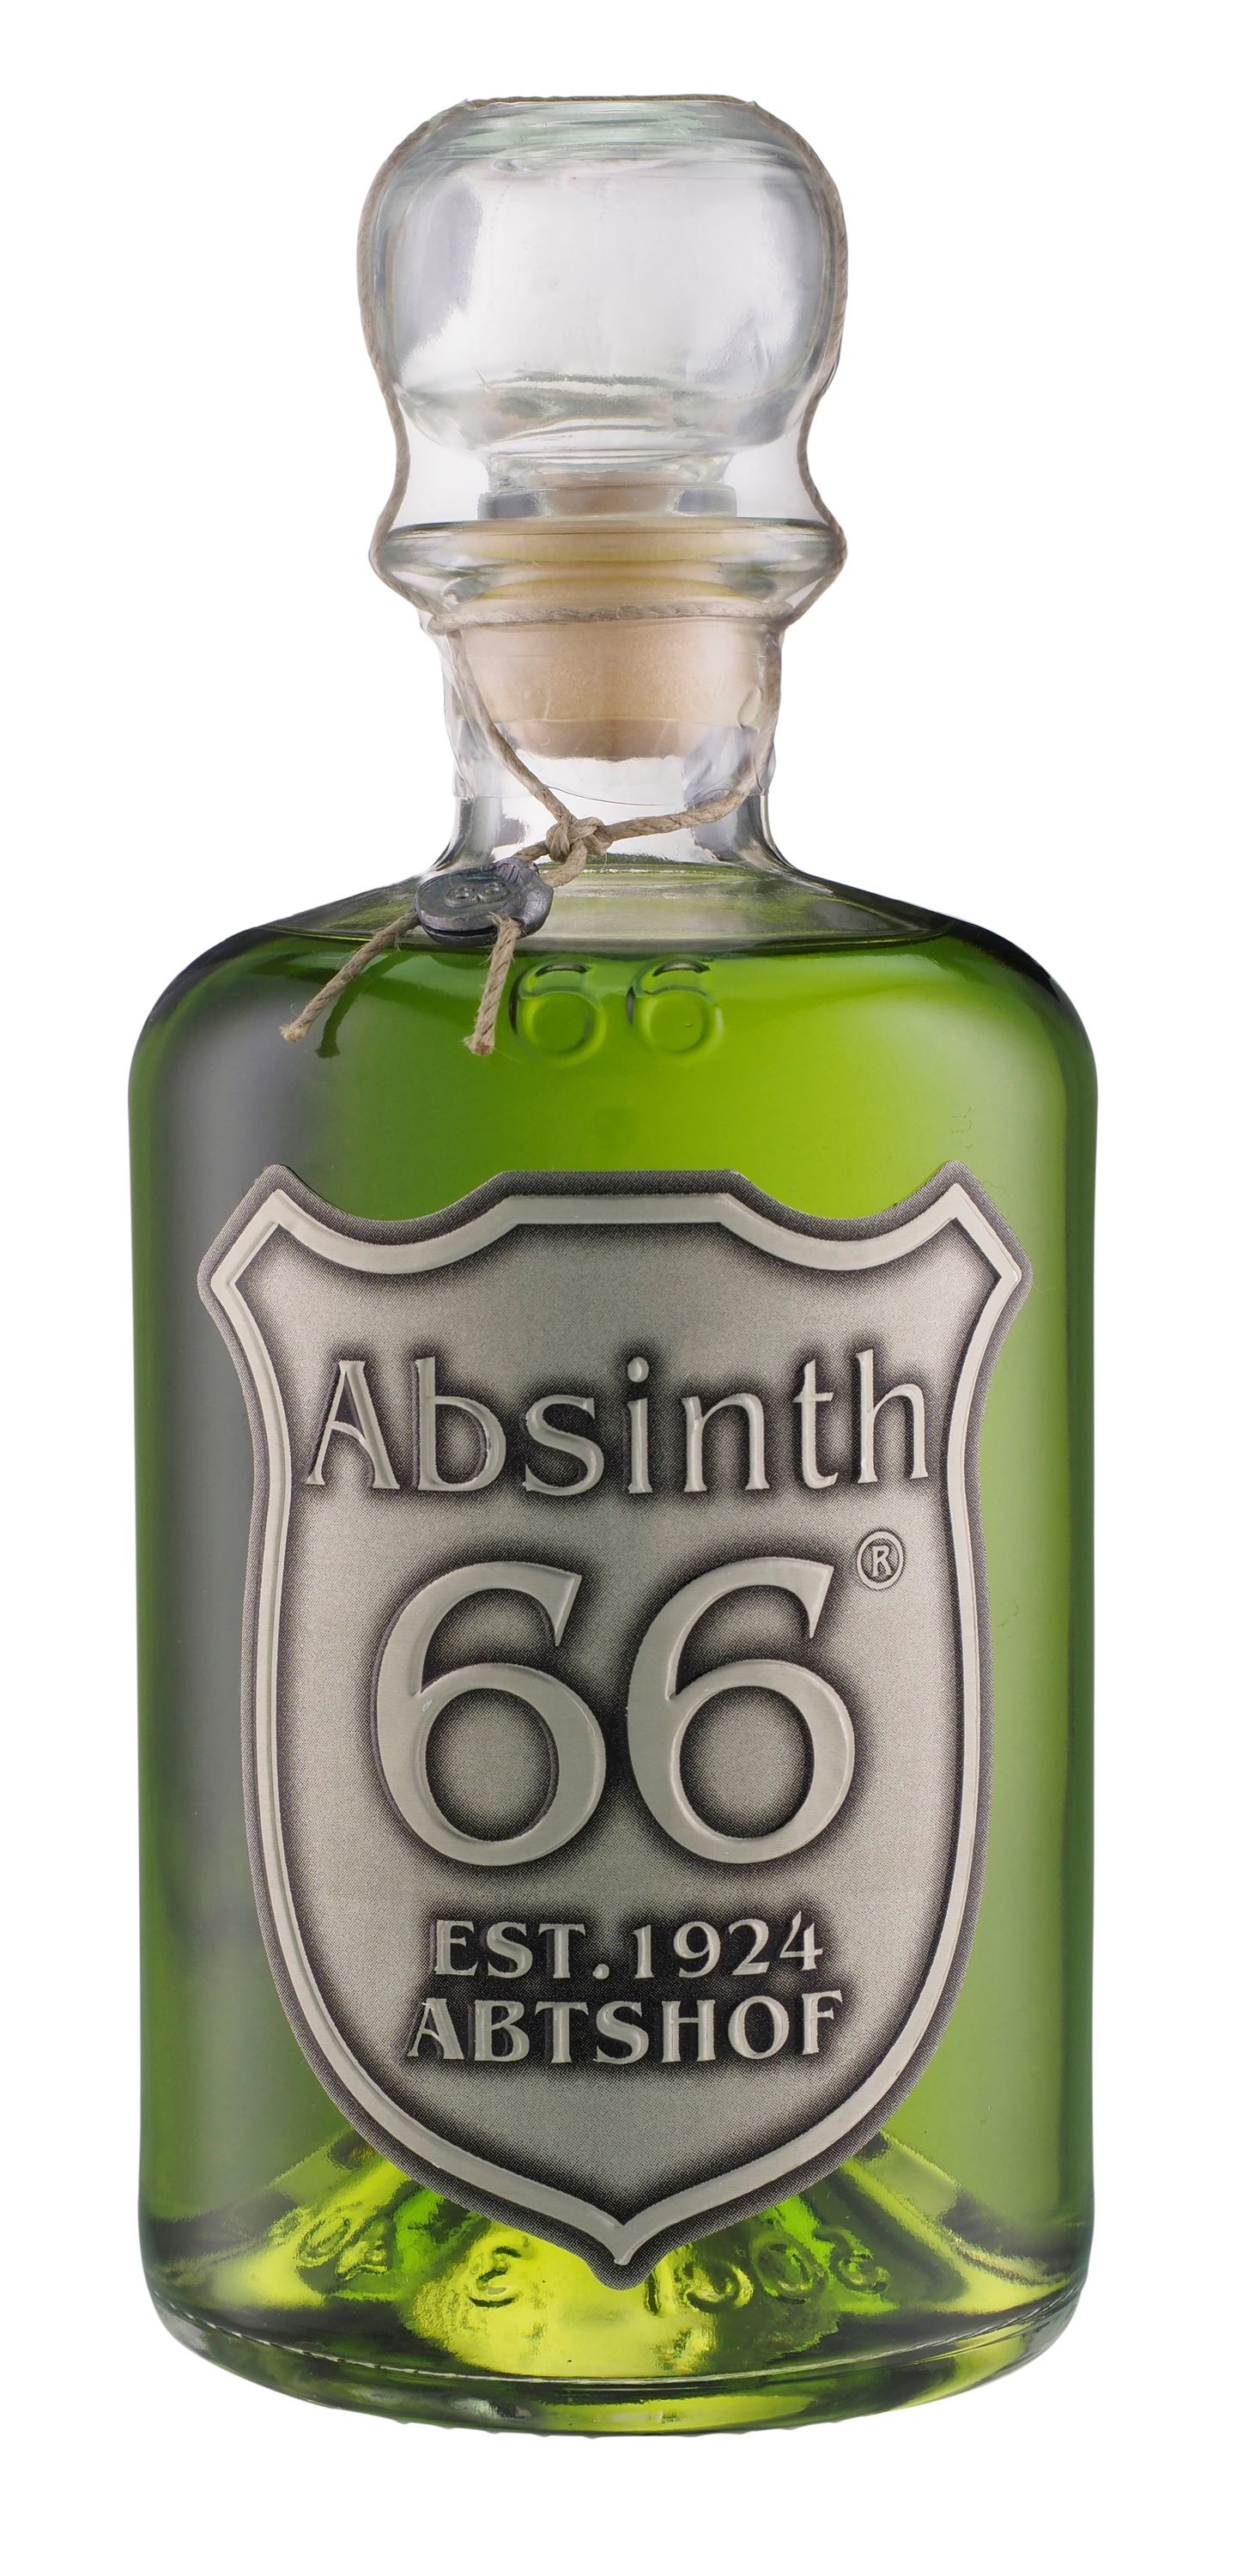 Absinthe 66 Abtshof, 0.5l alc. 66% by volume